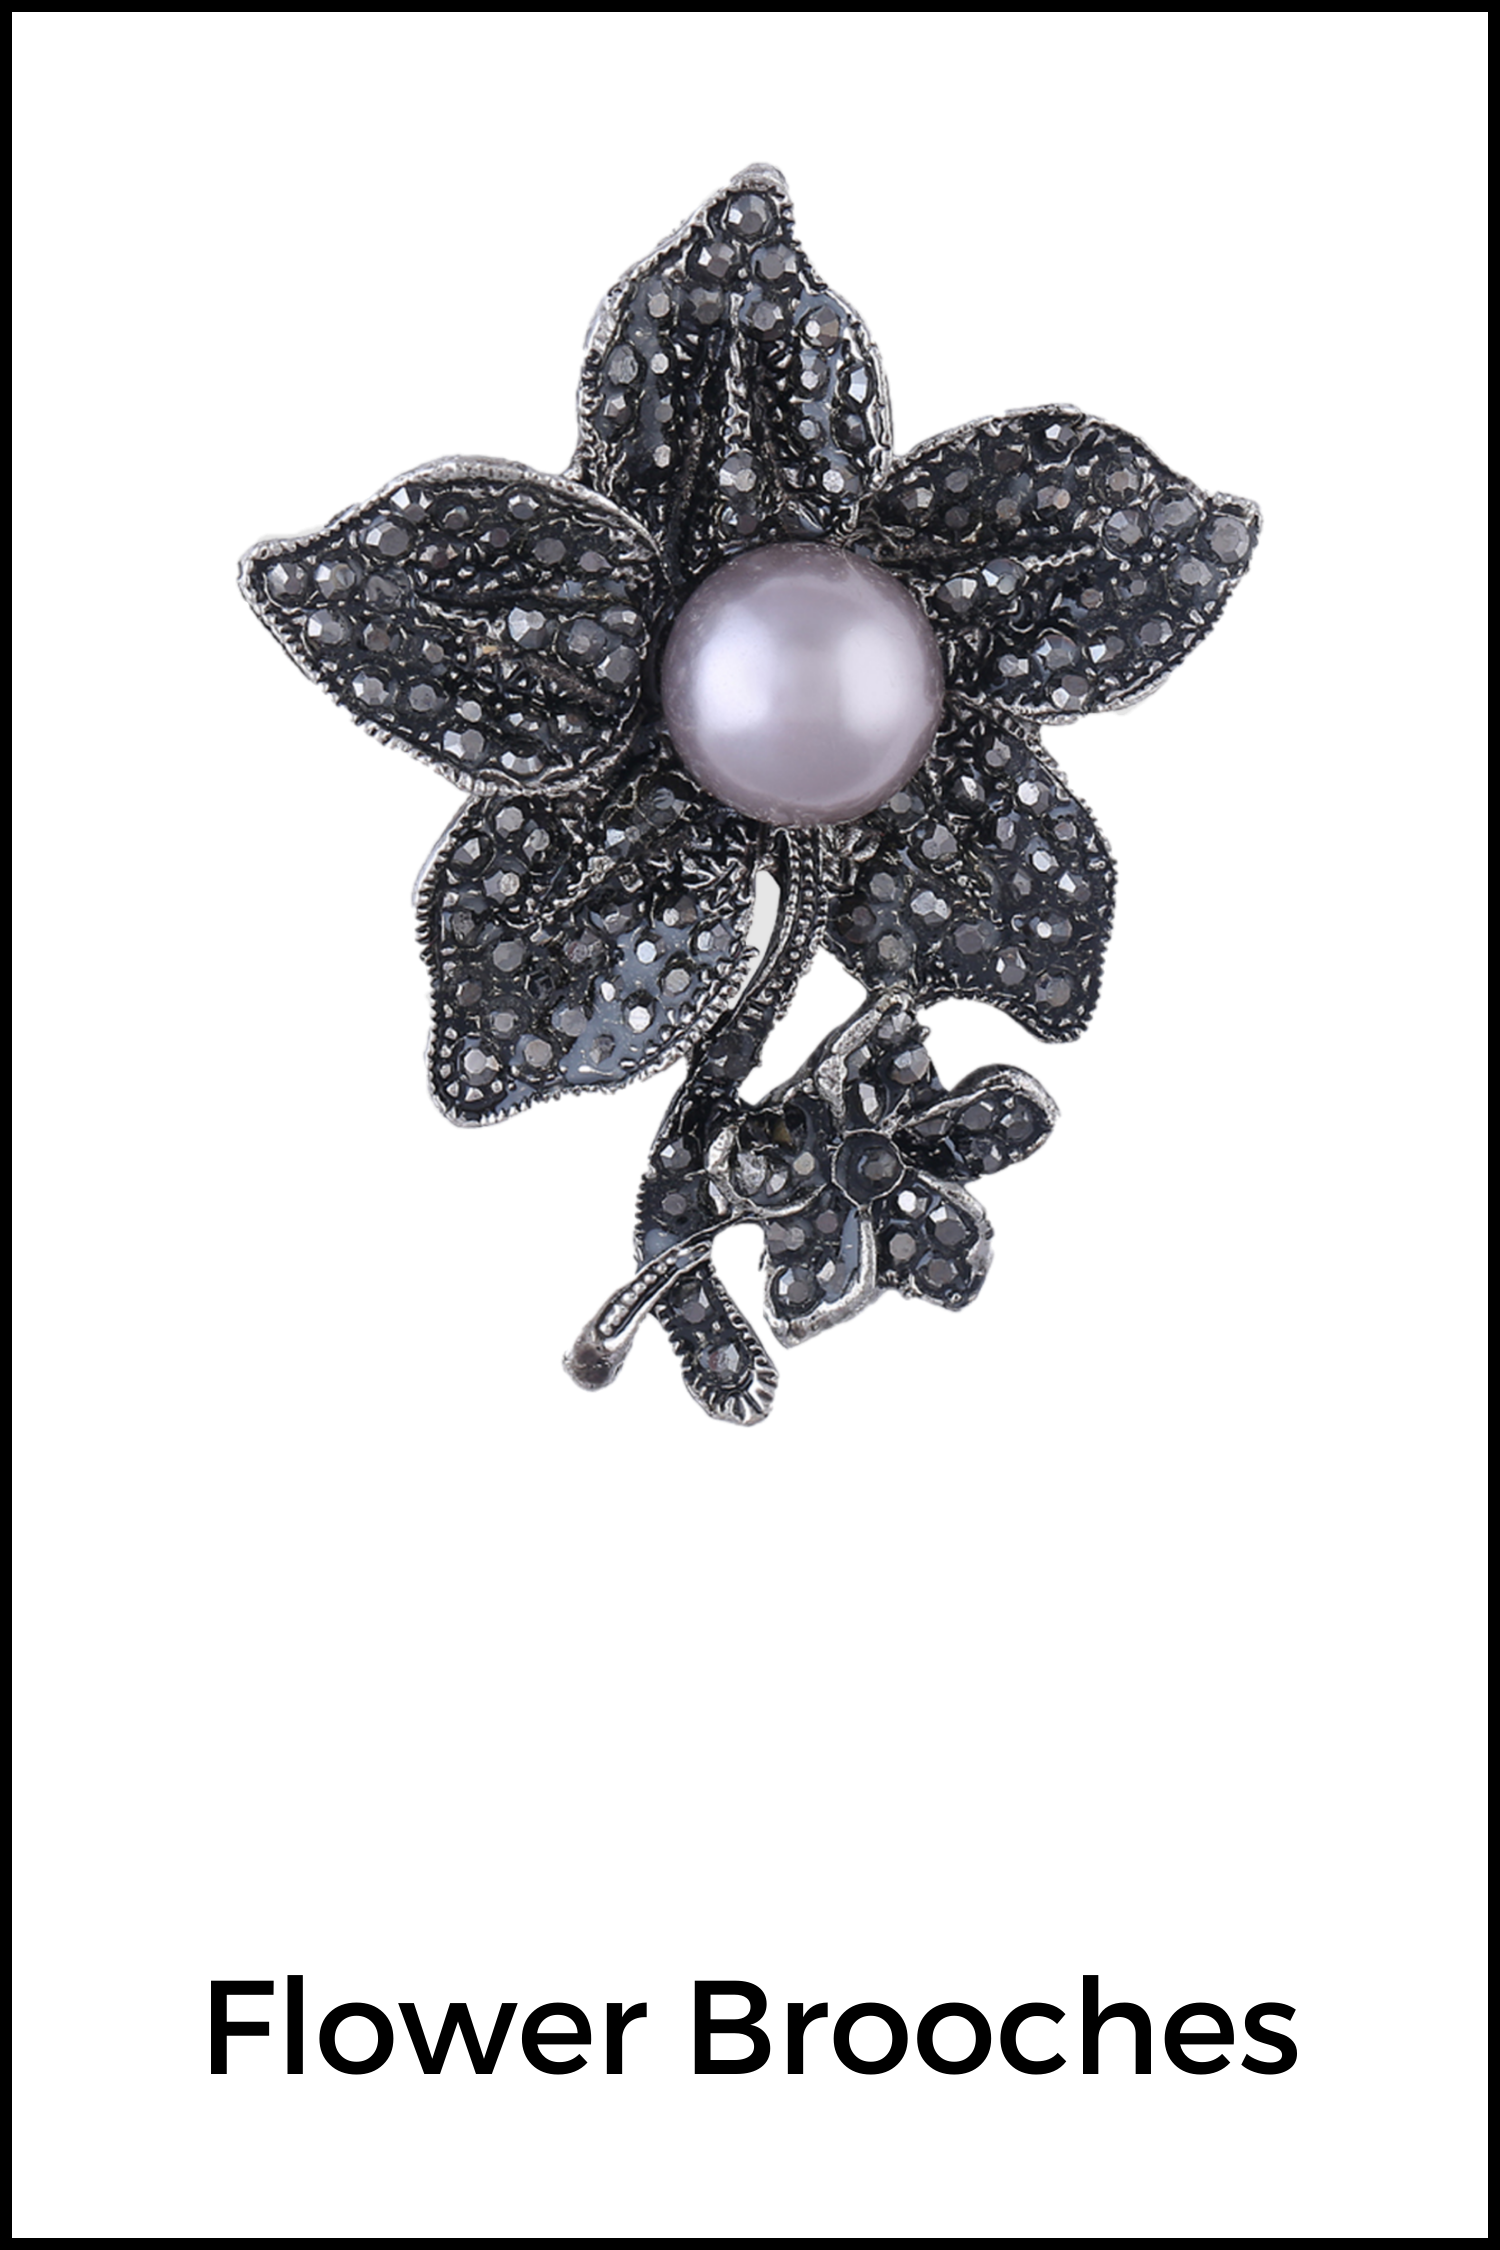 Navjai Rose Flower Multi Colour Fancy Vintage Style Brooches Pin for Women  Men's Formal Solid Flower